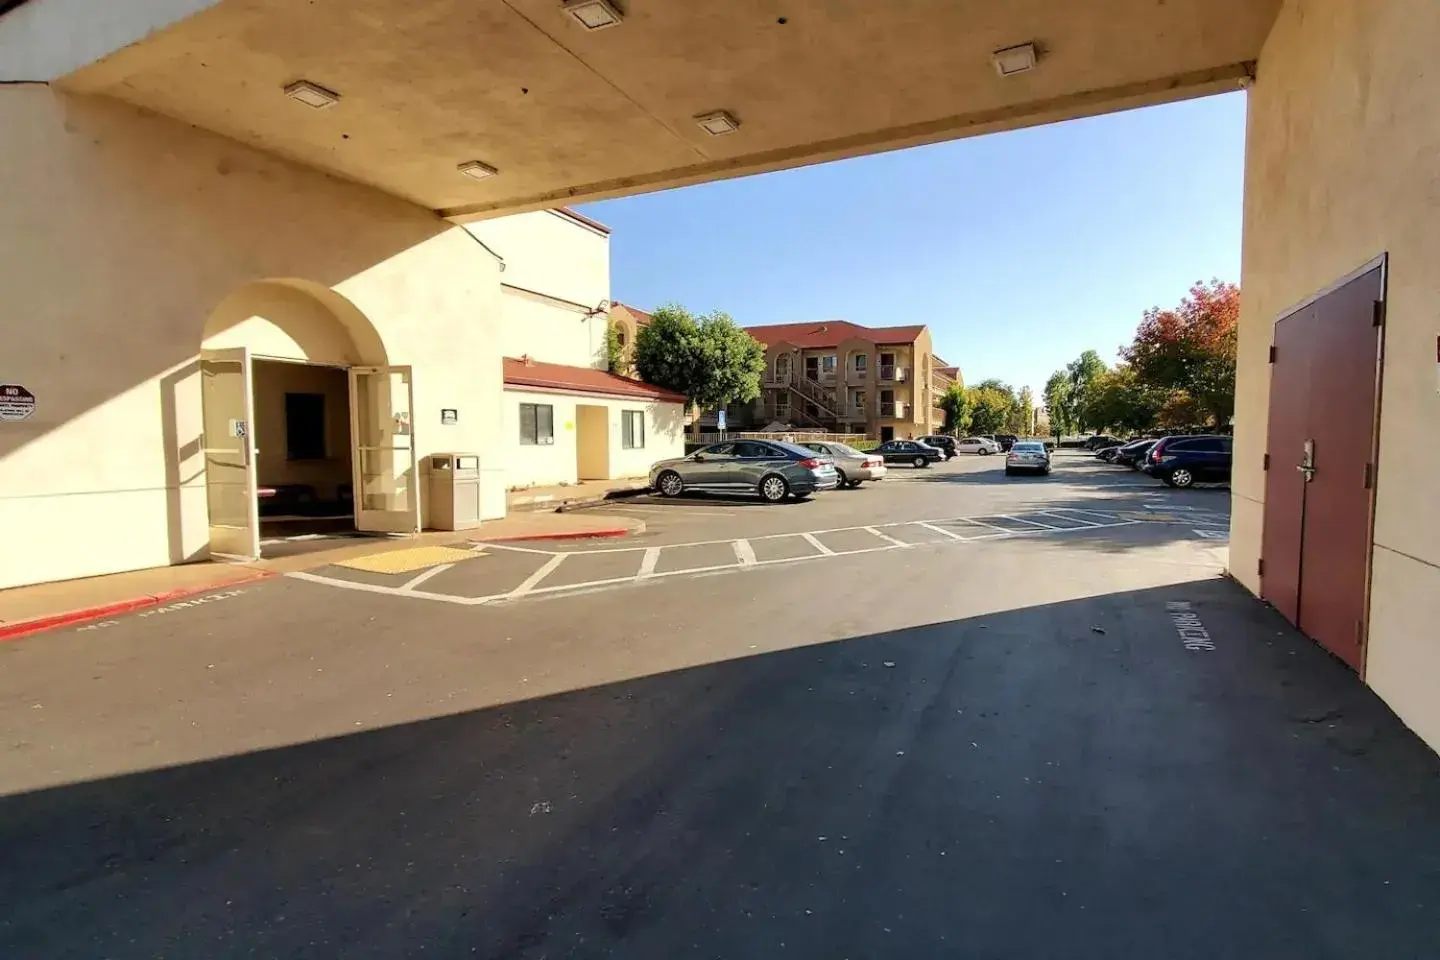 Neighbourhood in California Inn and Suites, Rancho Cordova